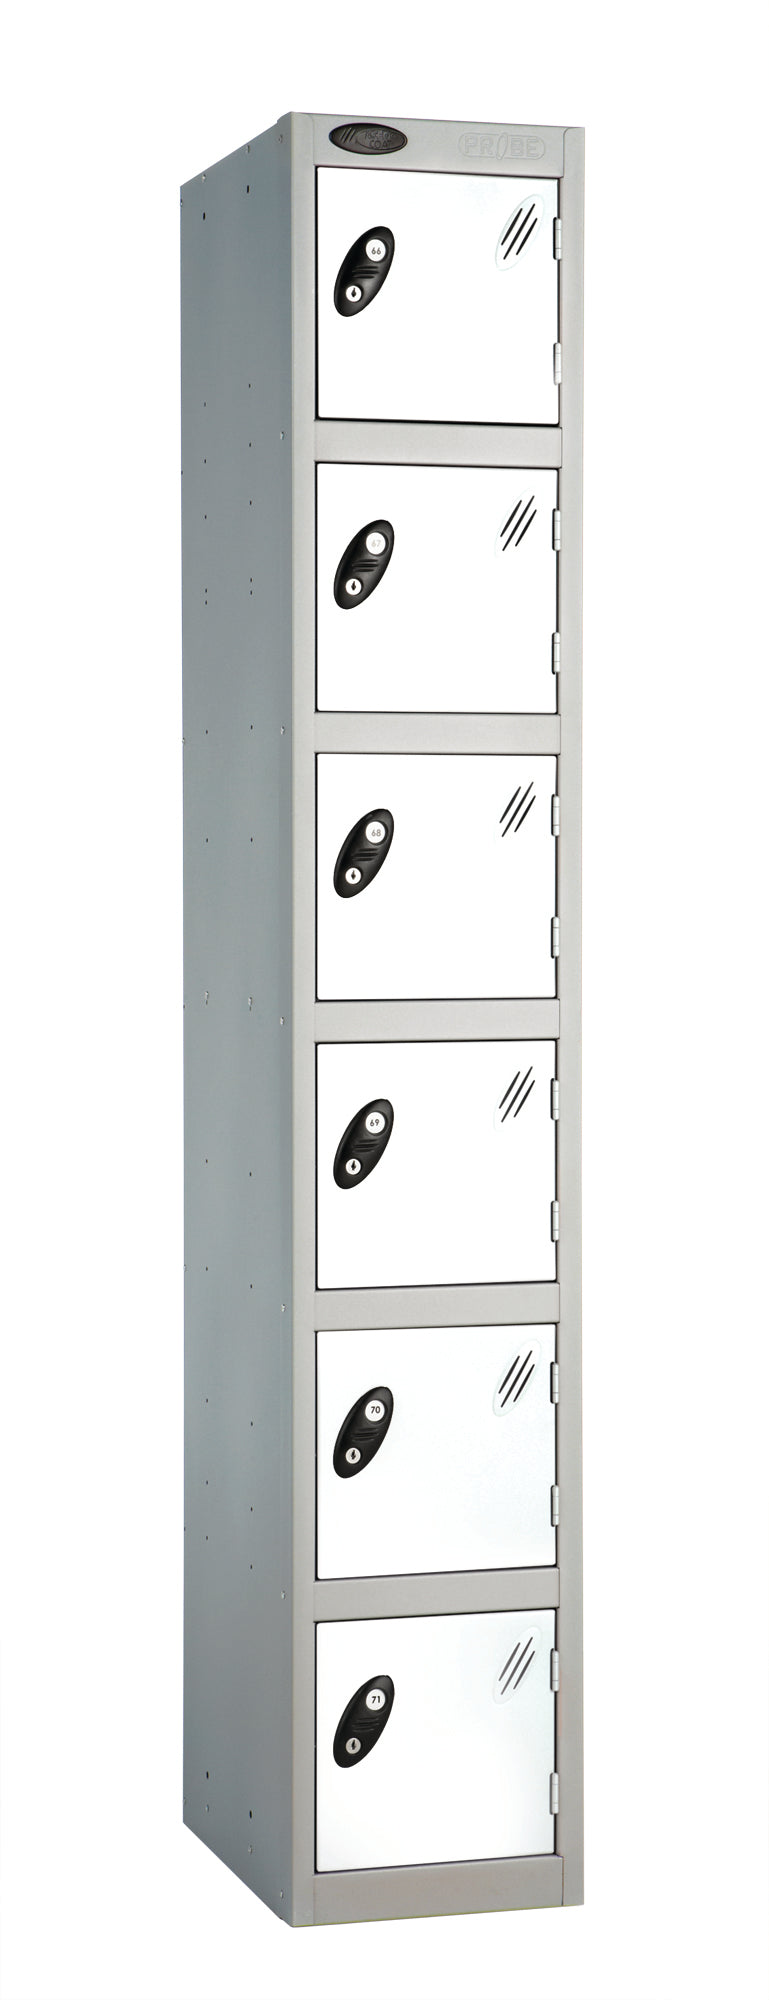 PROBEBOX STANDARD 1 NEST STEEL LOCKERS - SMOKEY WHITE 6 DOOR Storage Lockers > Lockers > Cabinets > Storage > Probe > One Stop For Safety   